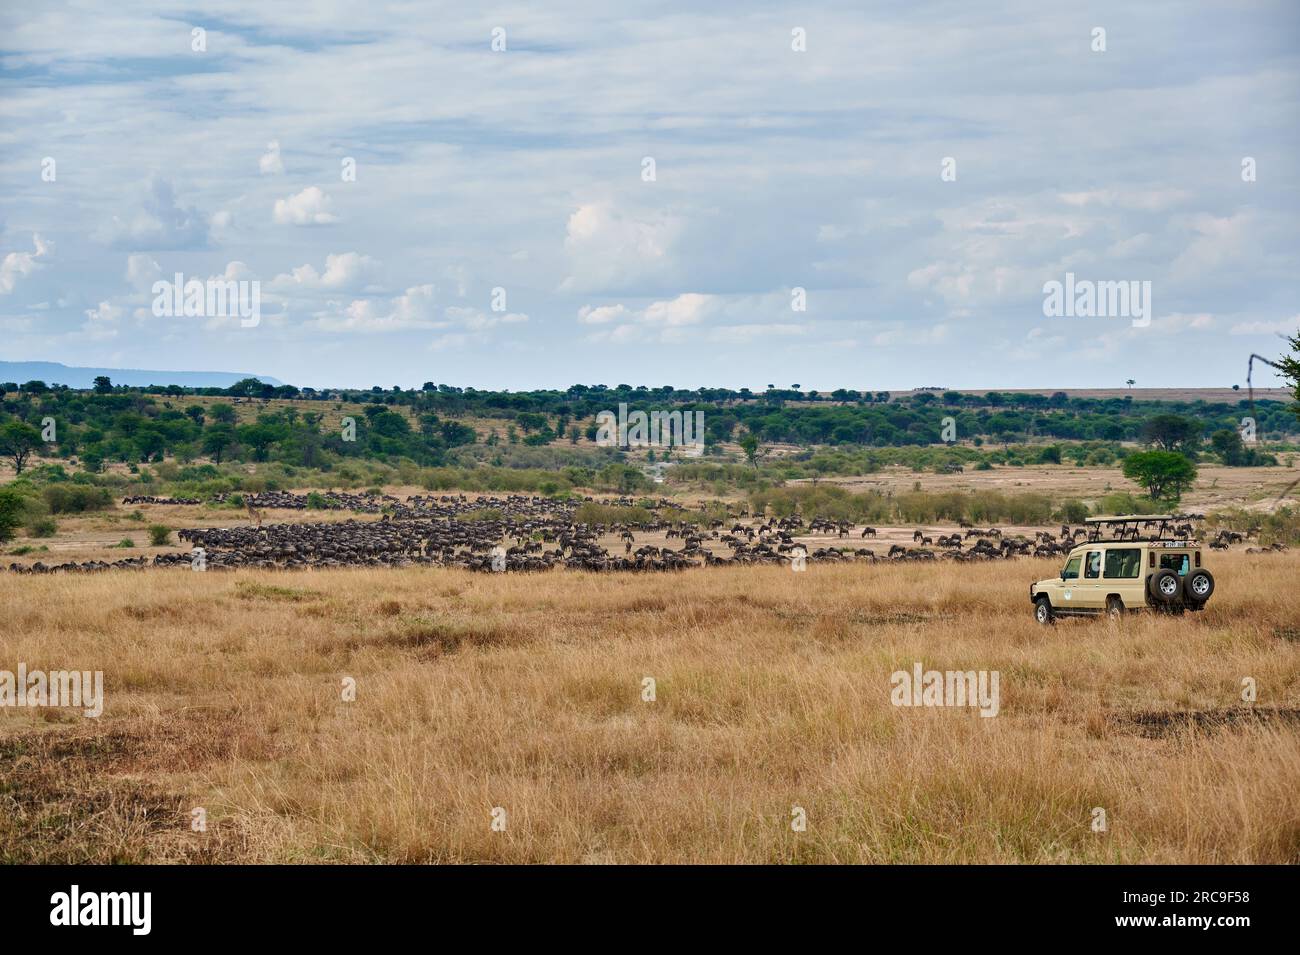 Auto beobachtet Weißbartgnus (Connochaetes mearnsi) auf der grossen Migration durch den Serengeti National Park, Tansania, Afrika |safari car watching Stock Photo